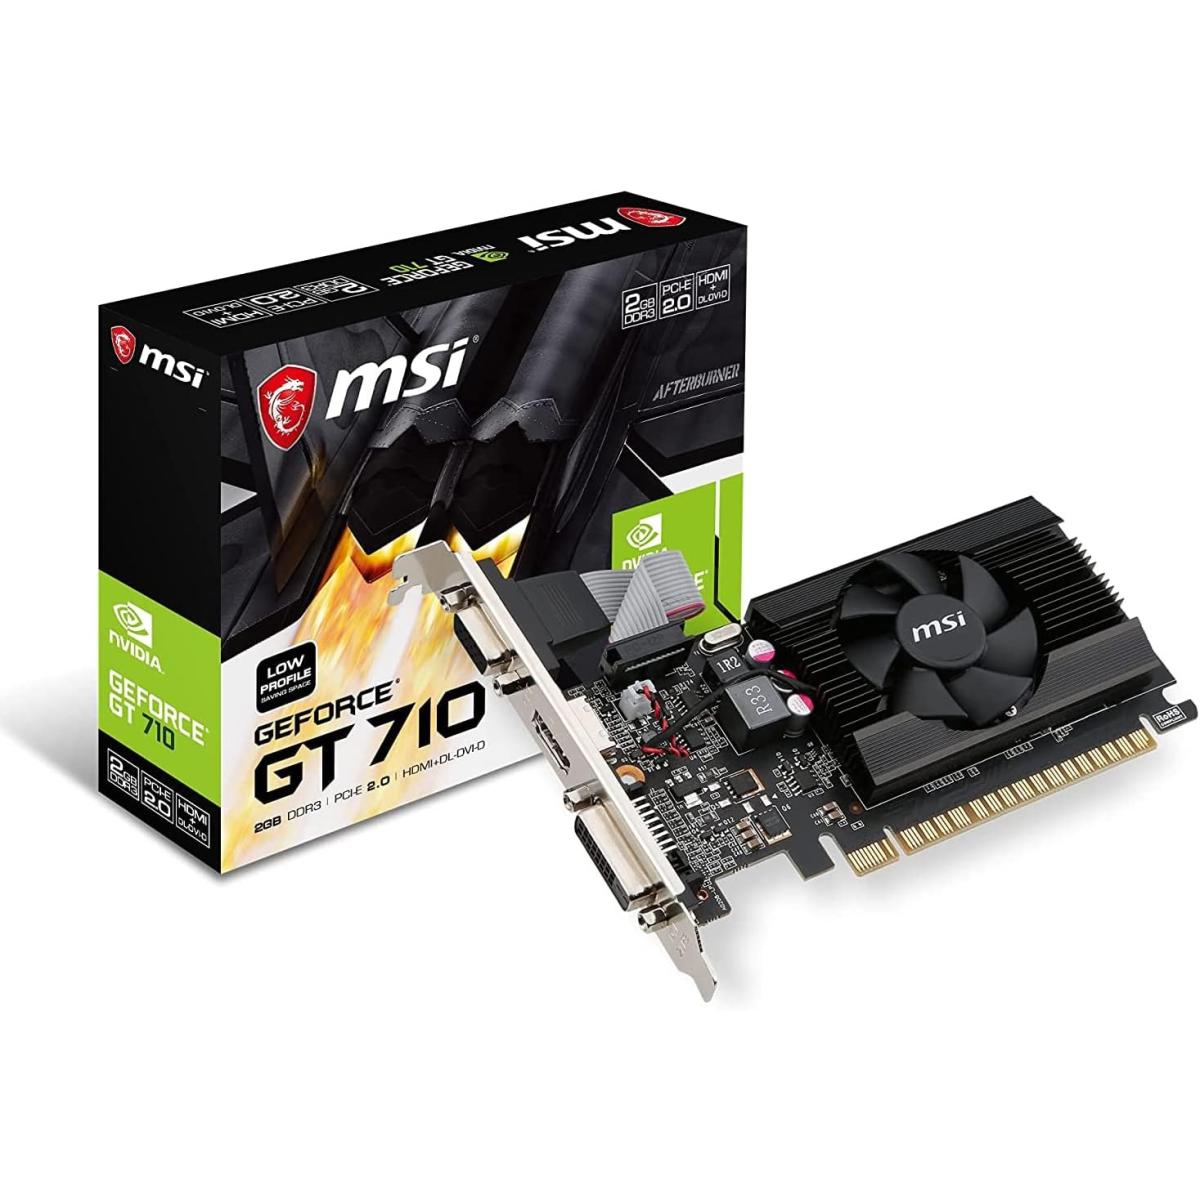 MSI GAMING GEFORCE GT 710 2GB GDRR3 64-BIT LOW PROFILE GRAPHICS CARD